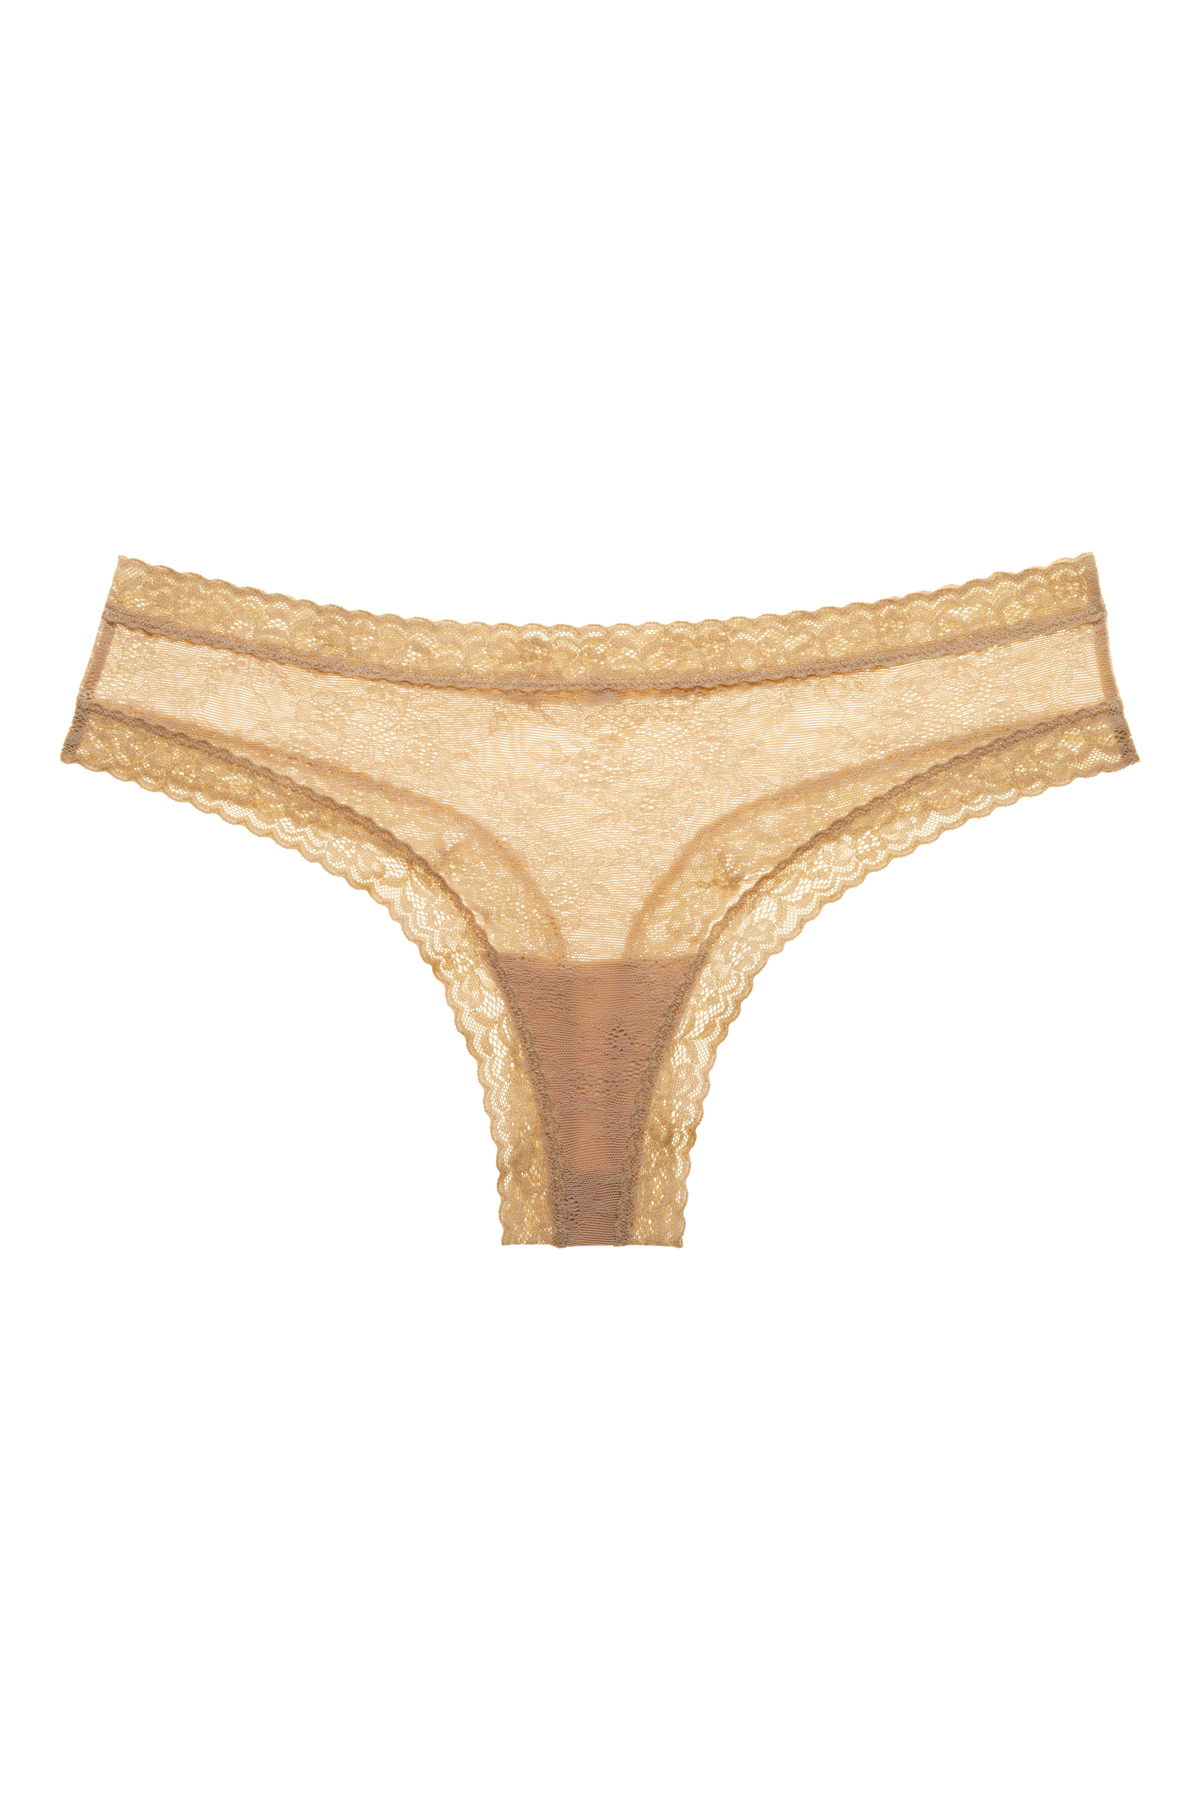 I.N.C. International Concepts Women's Lace-Trim Thong Underwear